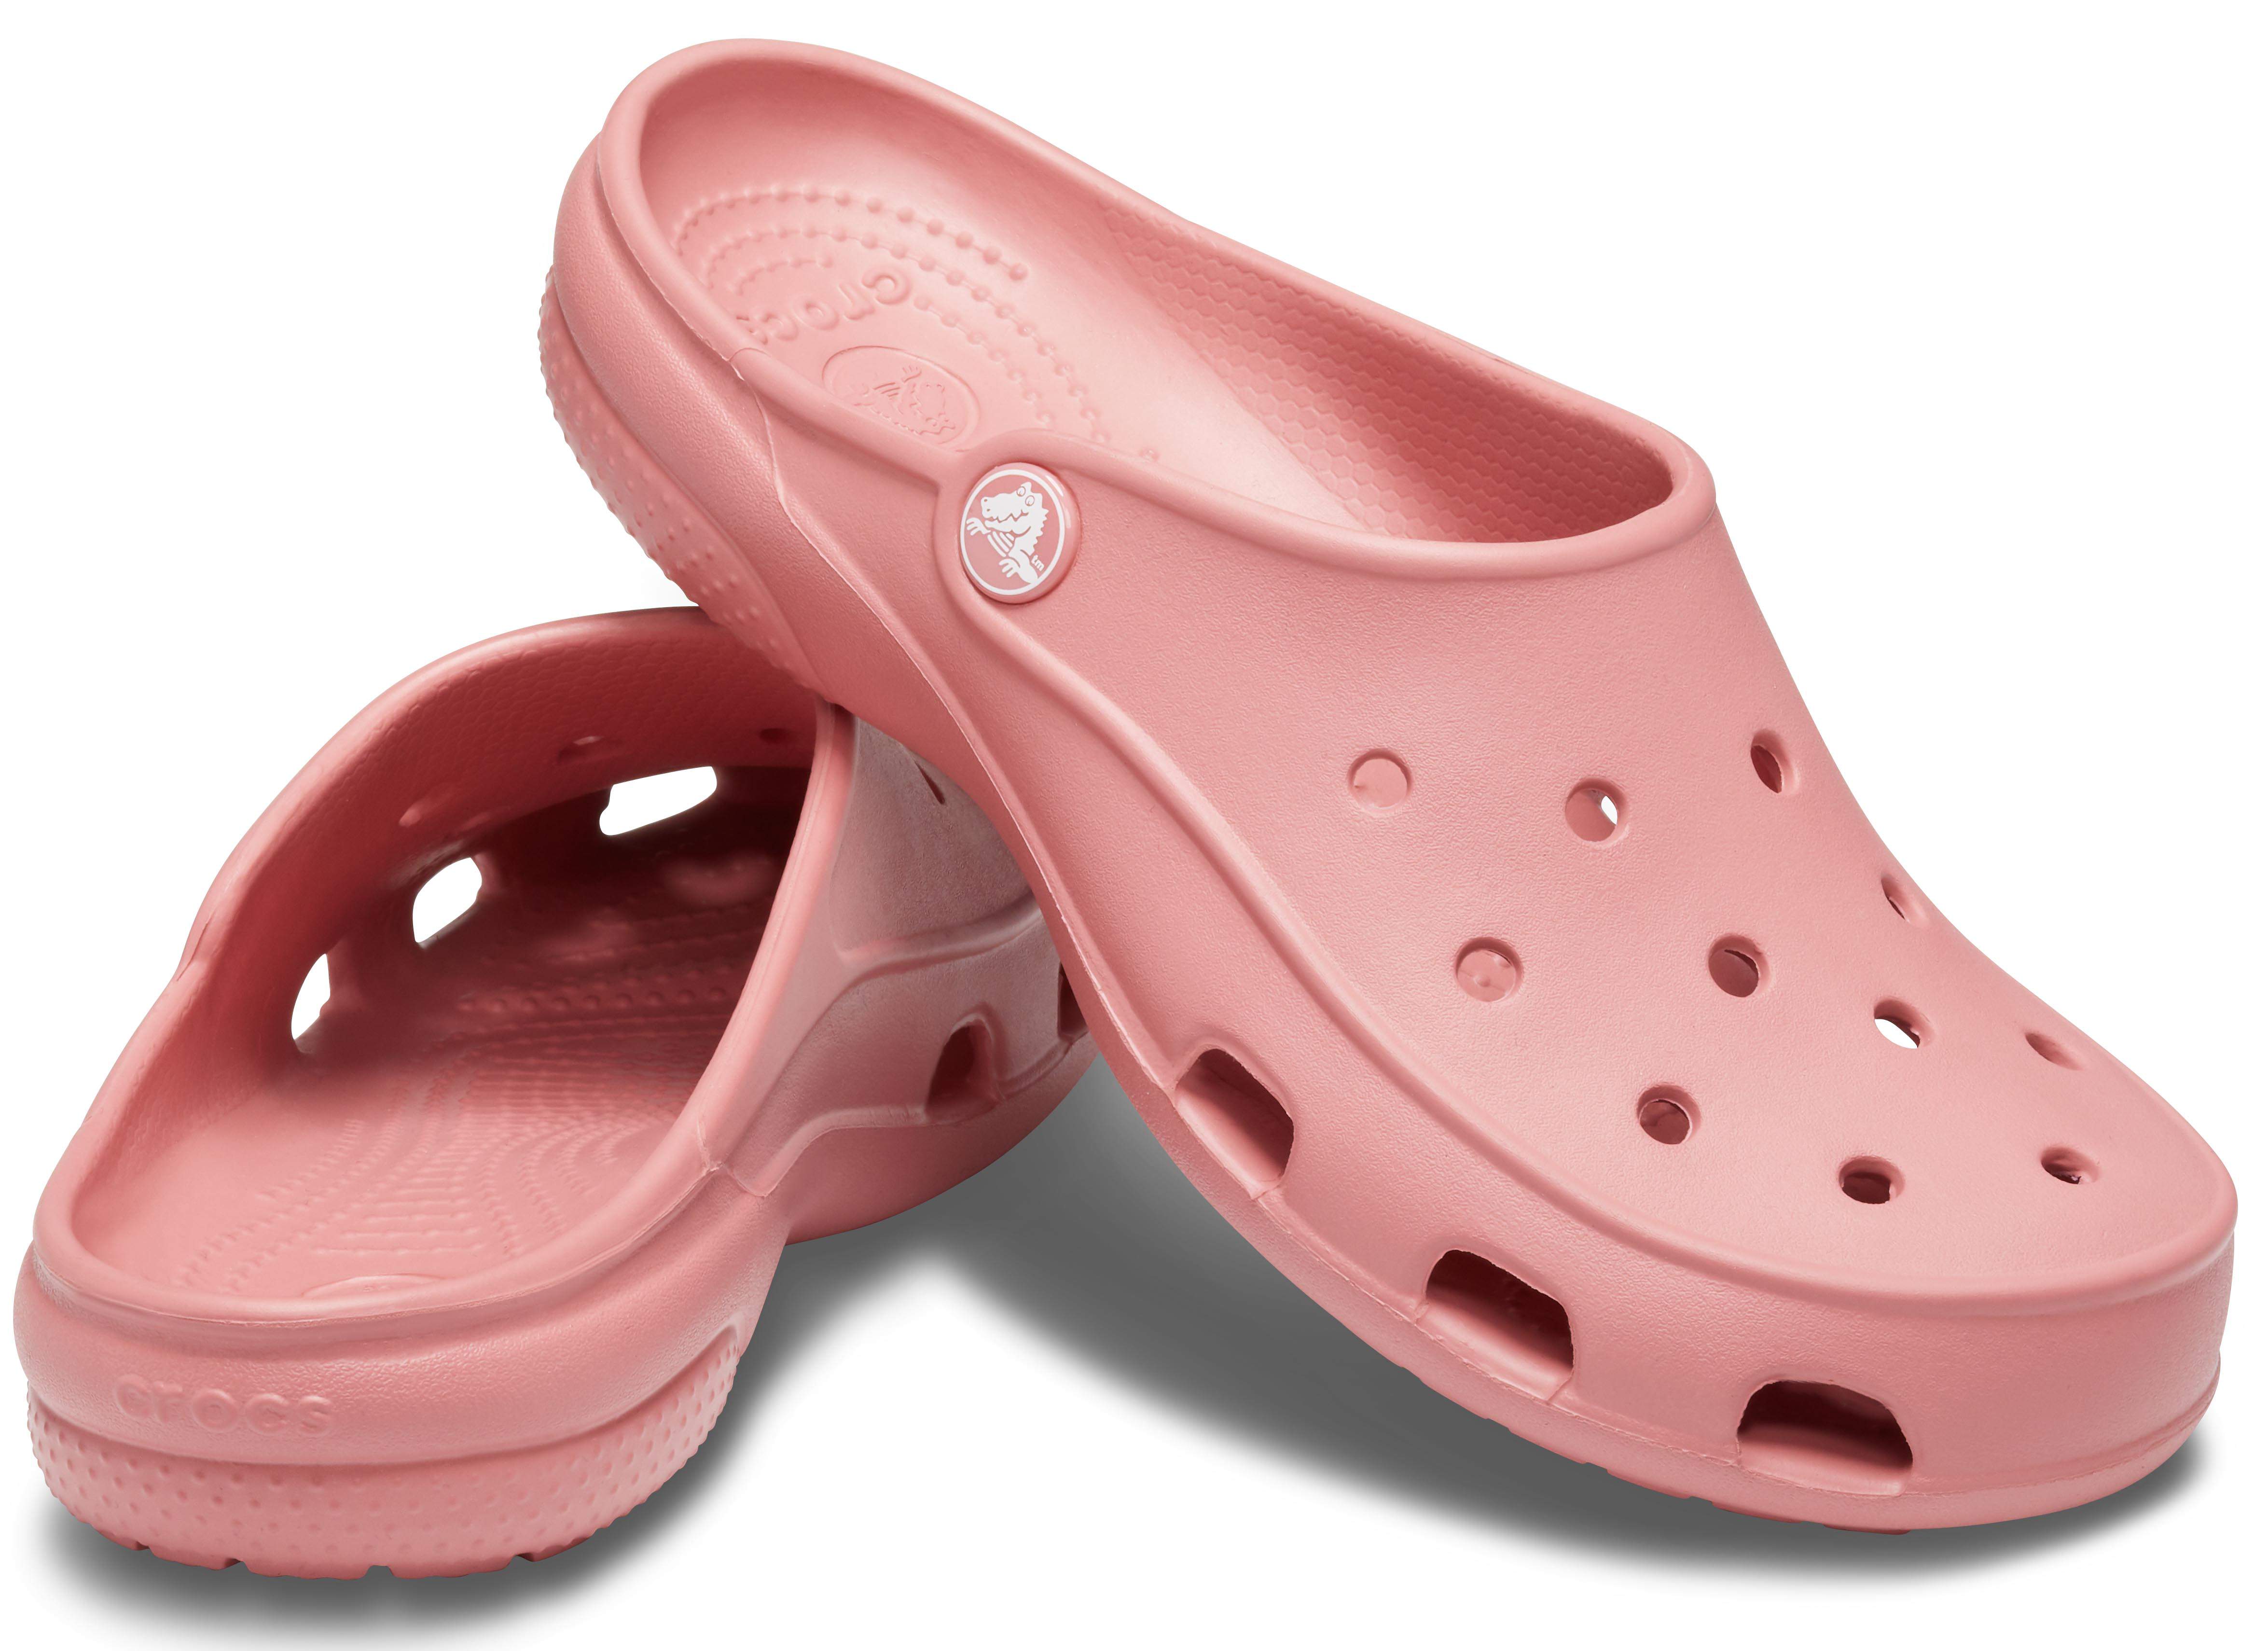 freesail clog crocs